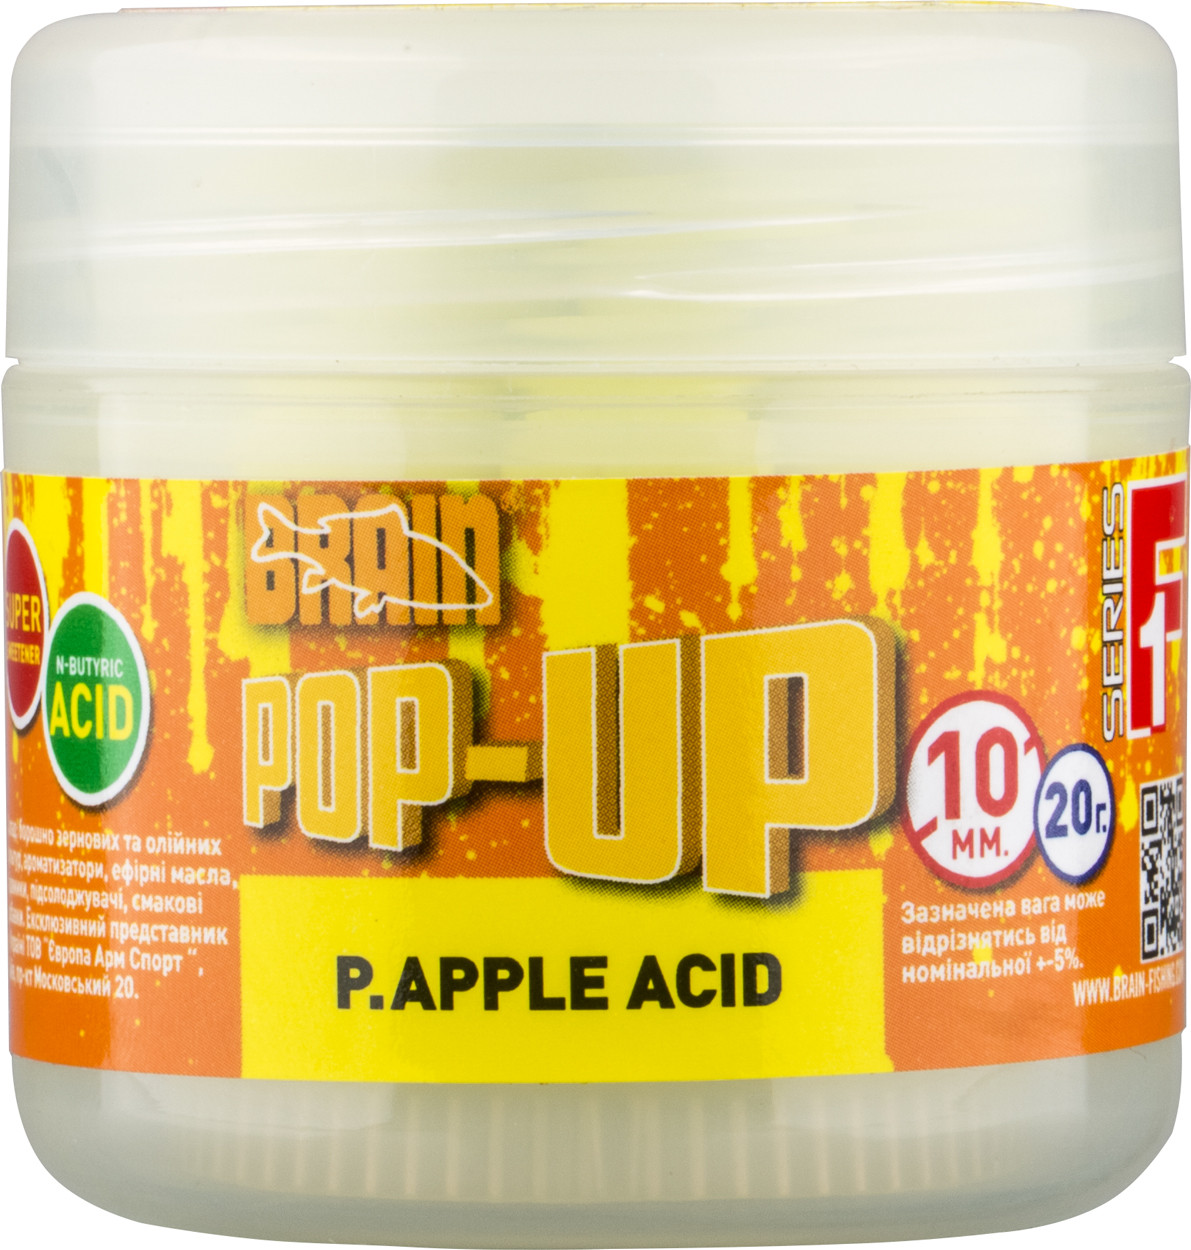 Бойли Brain Pop-Up F1 P.Apple Acid (ананас) 10 mm 20 gr